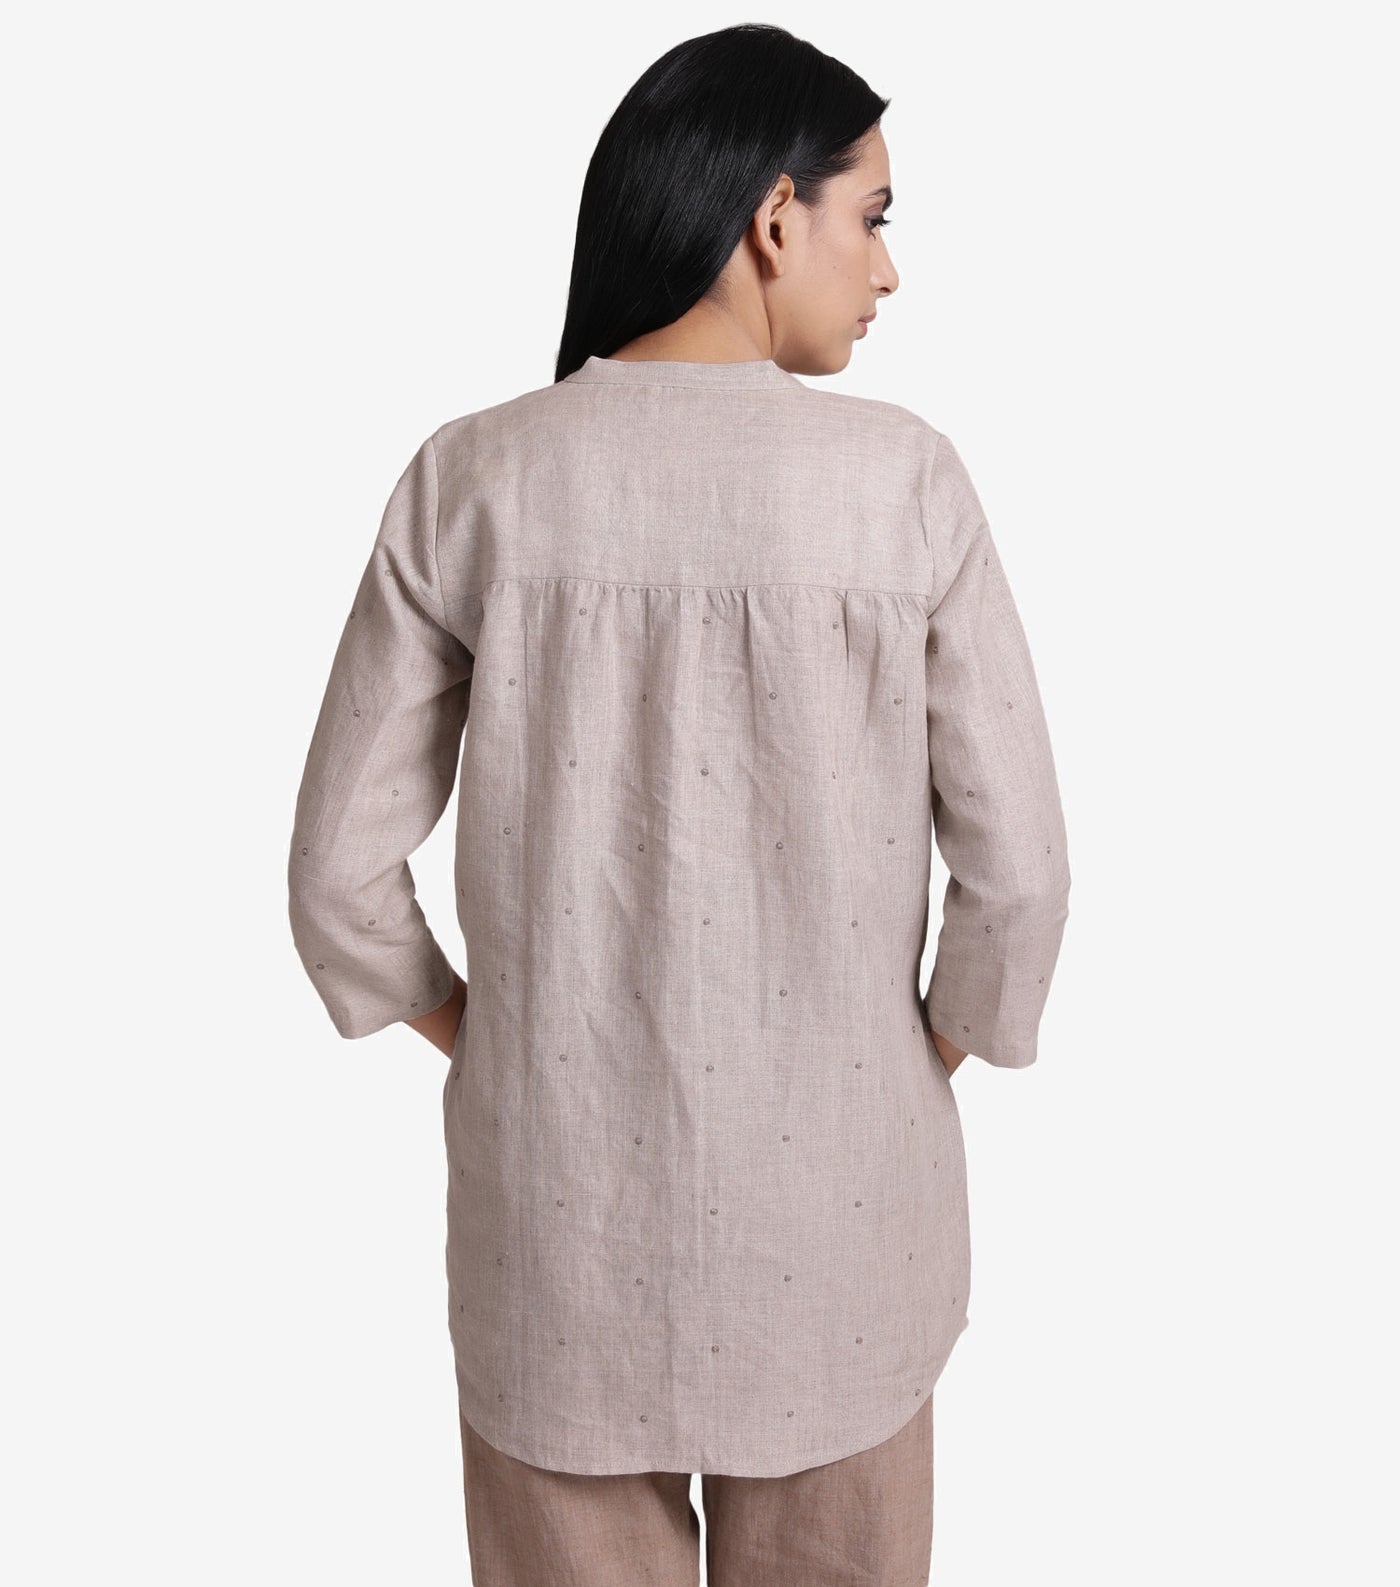 Beige linen embroidered shirt